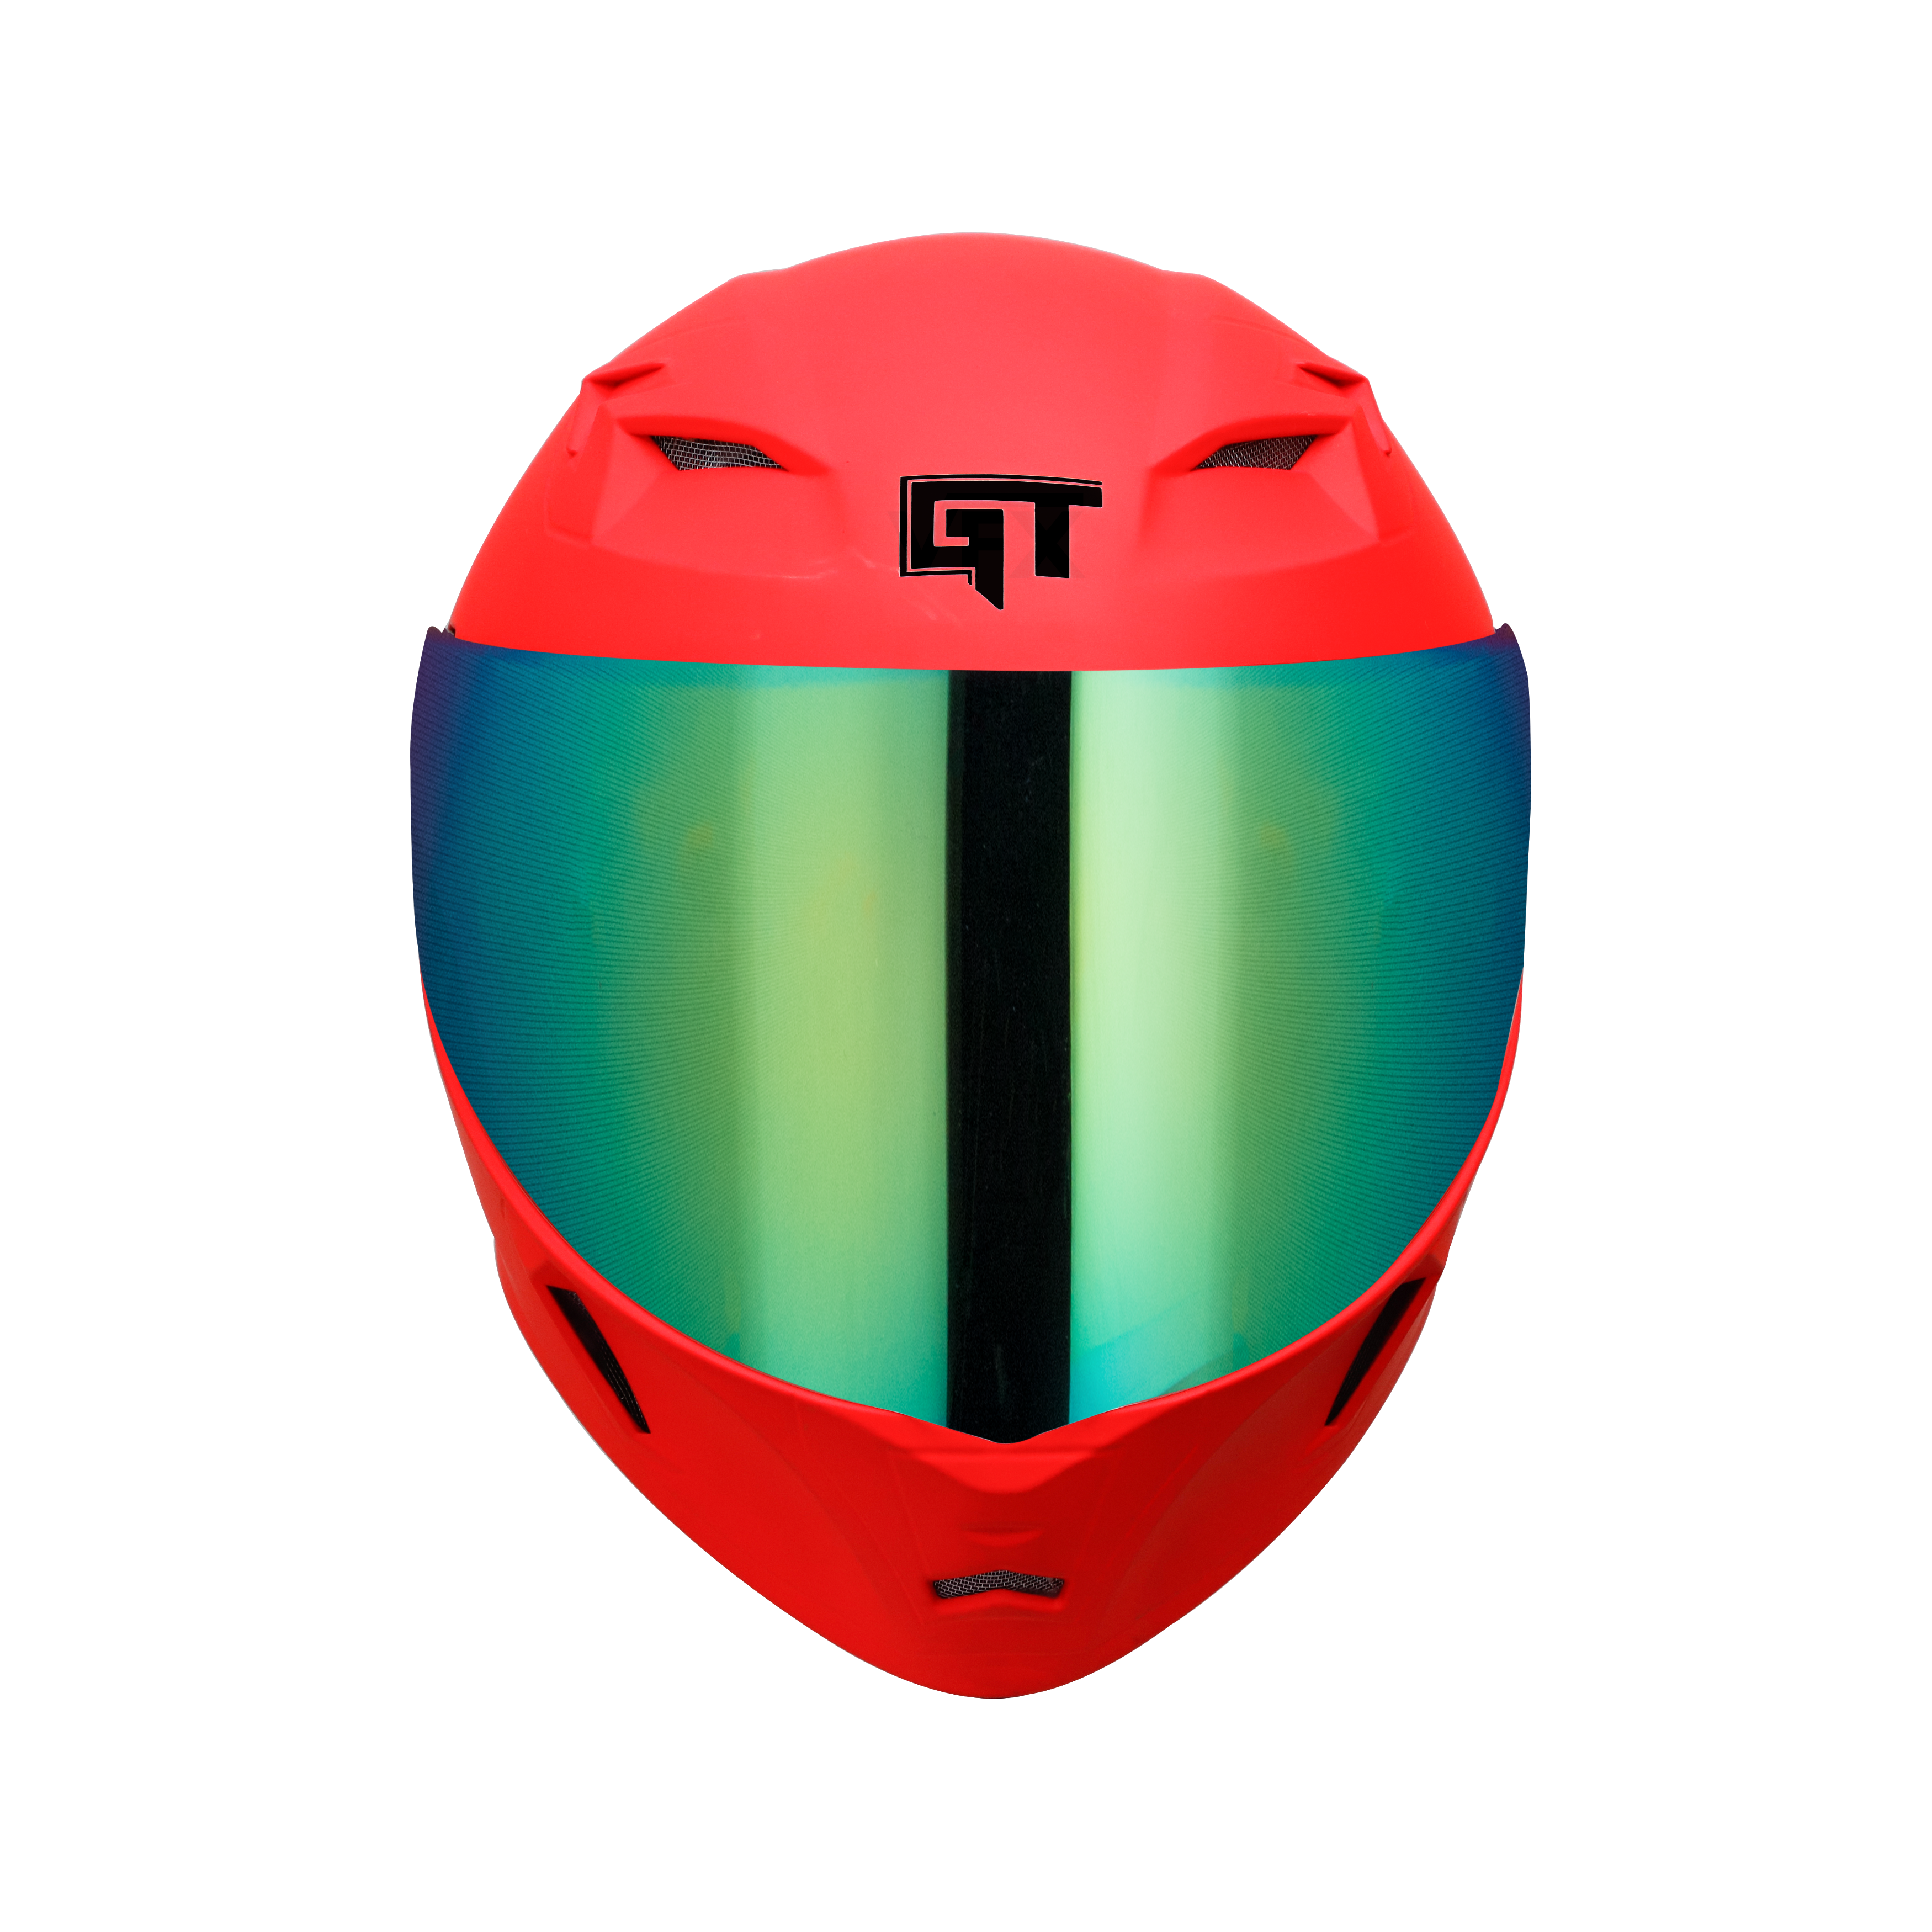 Steelbird SBA-21 GT Full Face ISI Certified Helmet (Glossy Fluo Watermelon With Chrome Blue Visor)